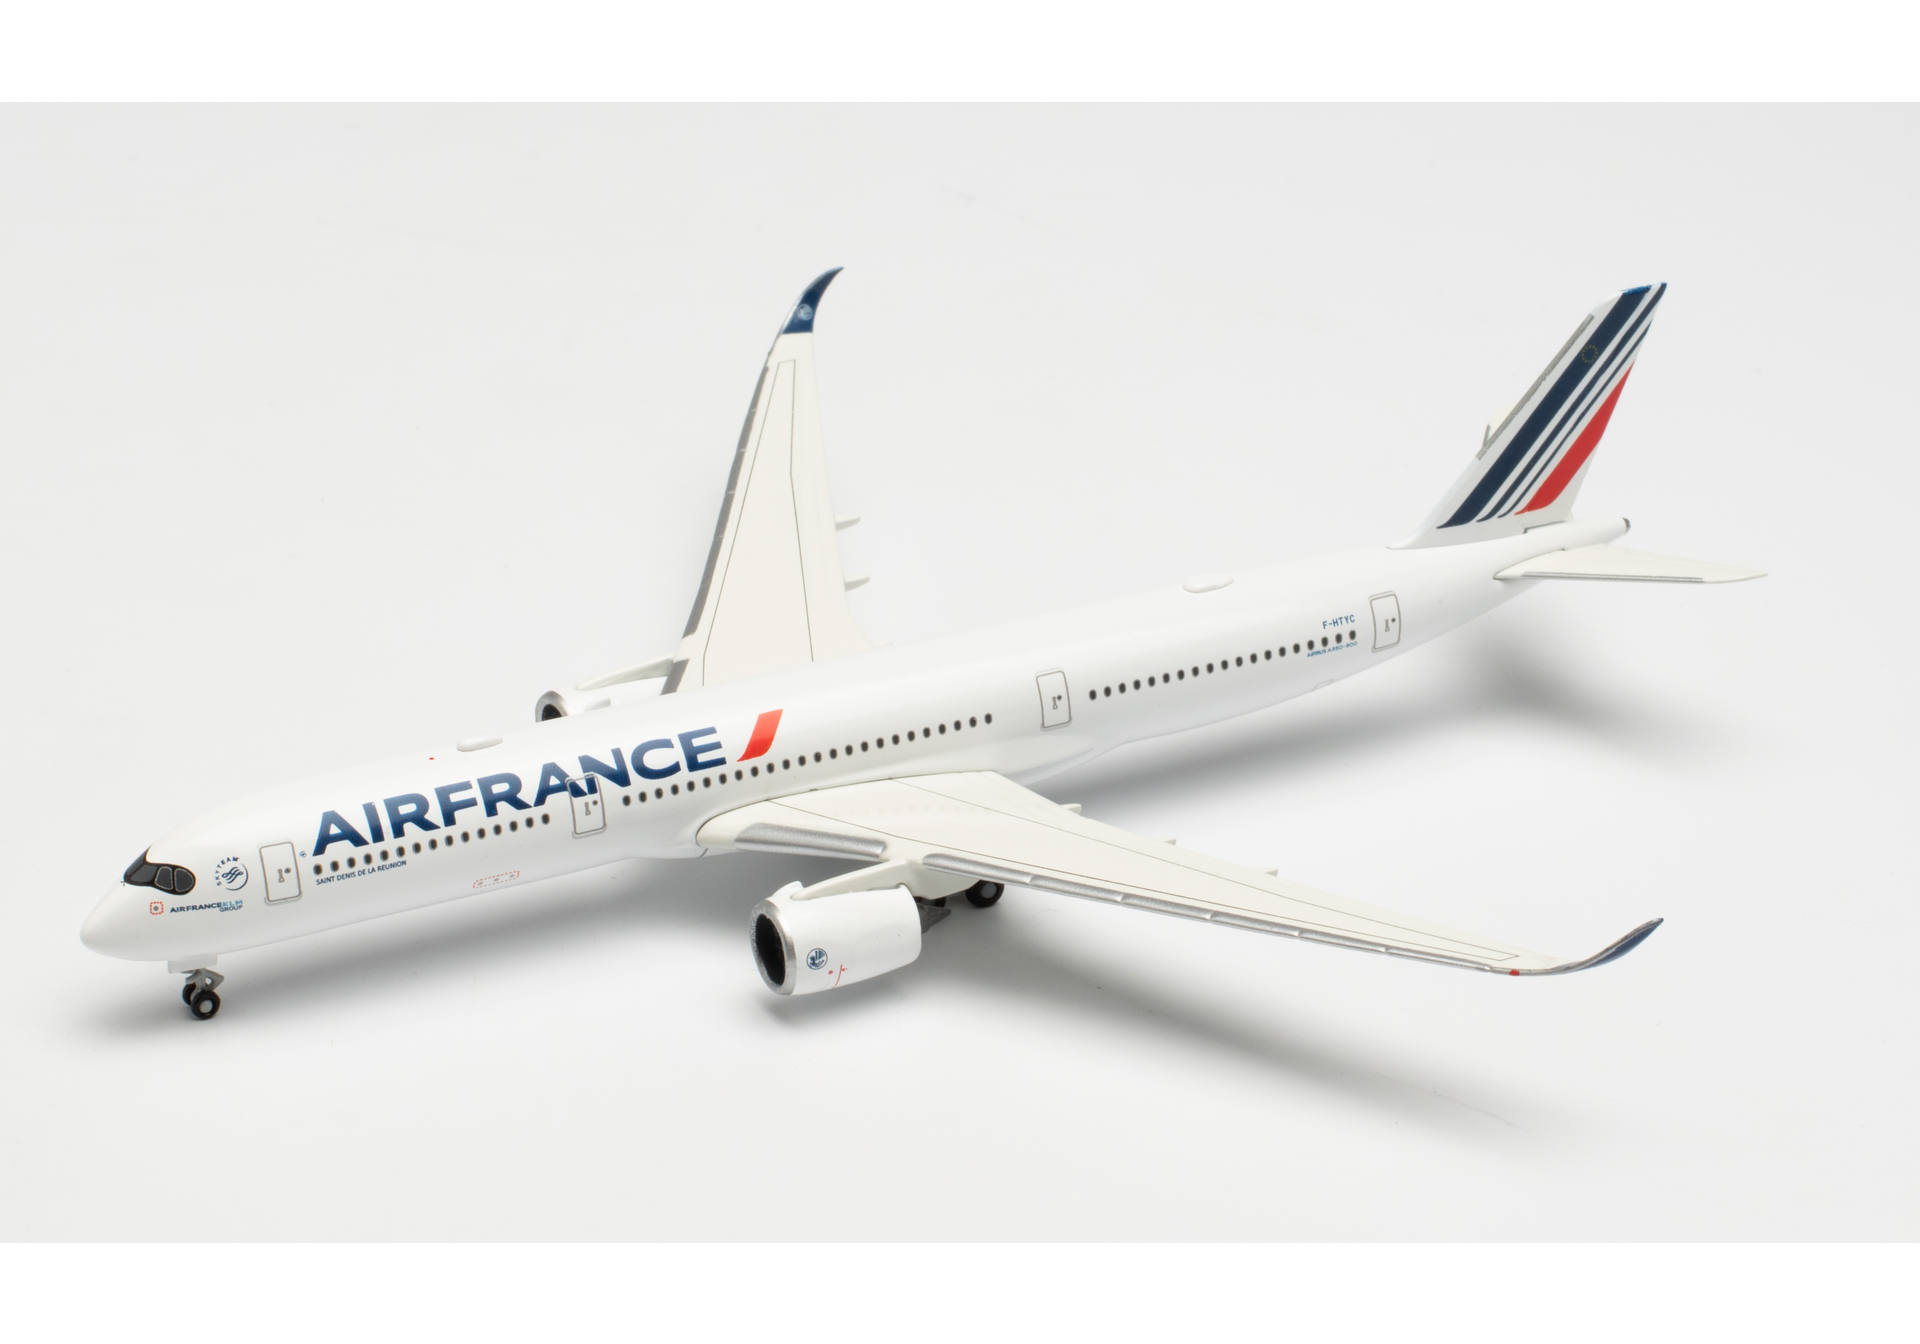   Air France Airbus A350-900  F-HTYC, 1:500, 533478-001. # 3 hobbyplus.ru